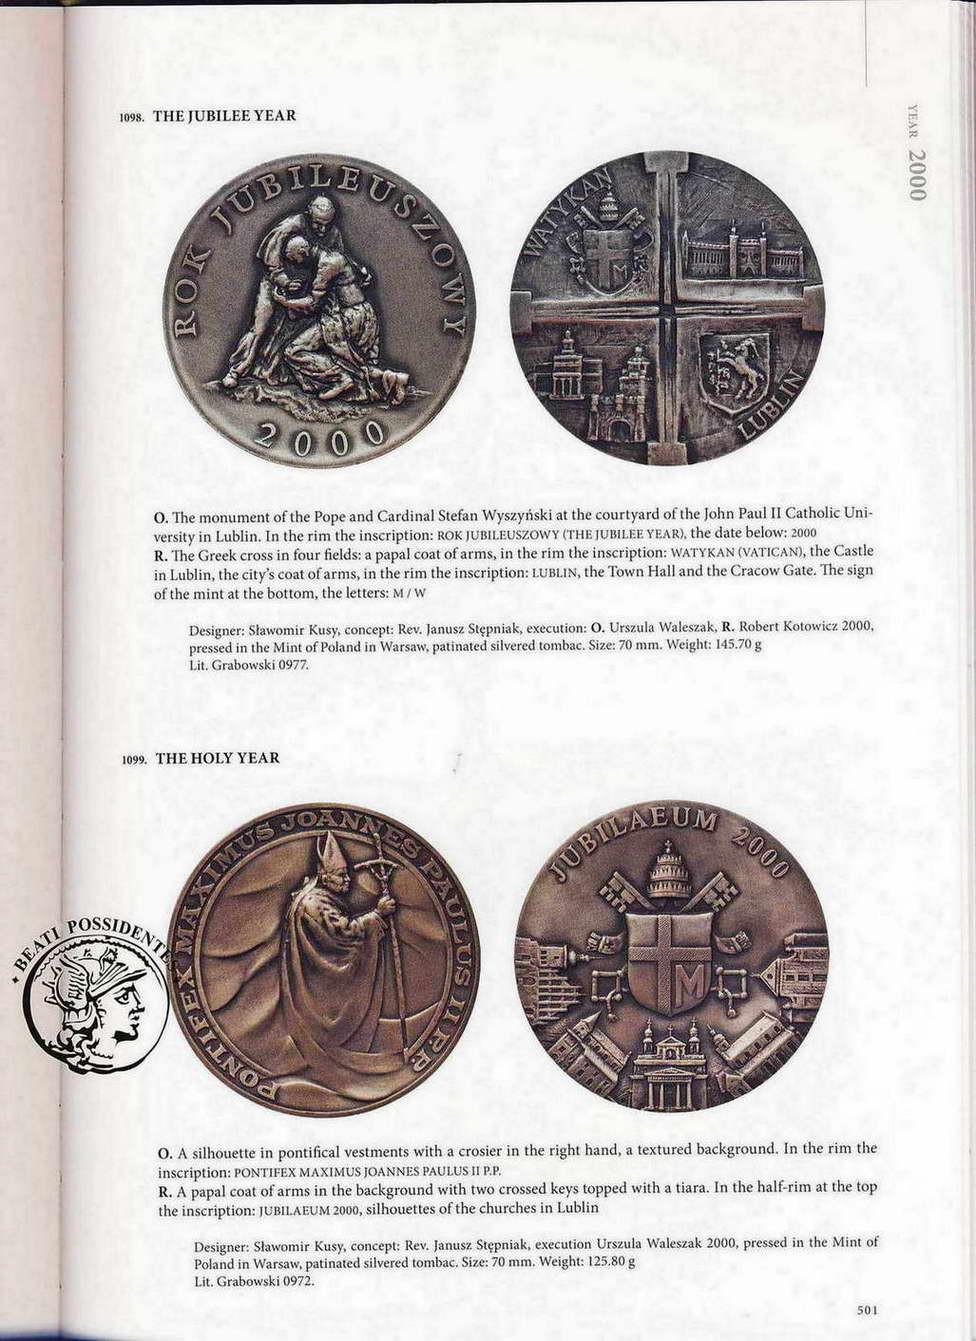 John Paul II in Polish medallic art - Zbigniew Nestorowicz